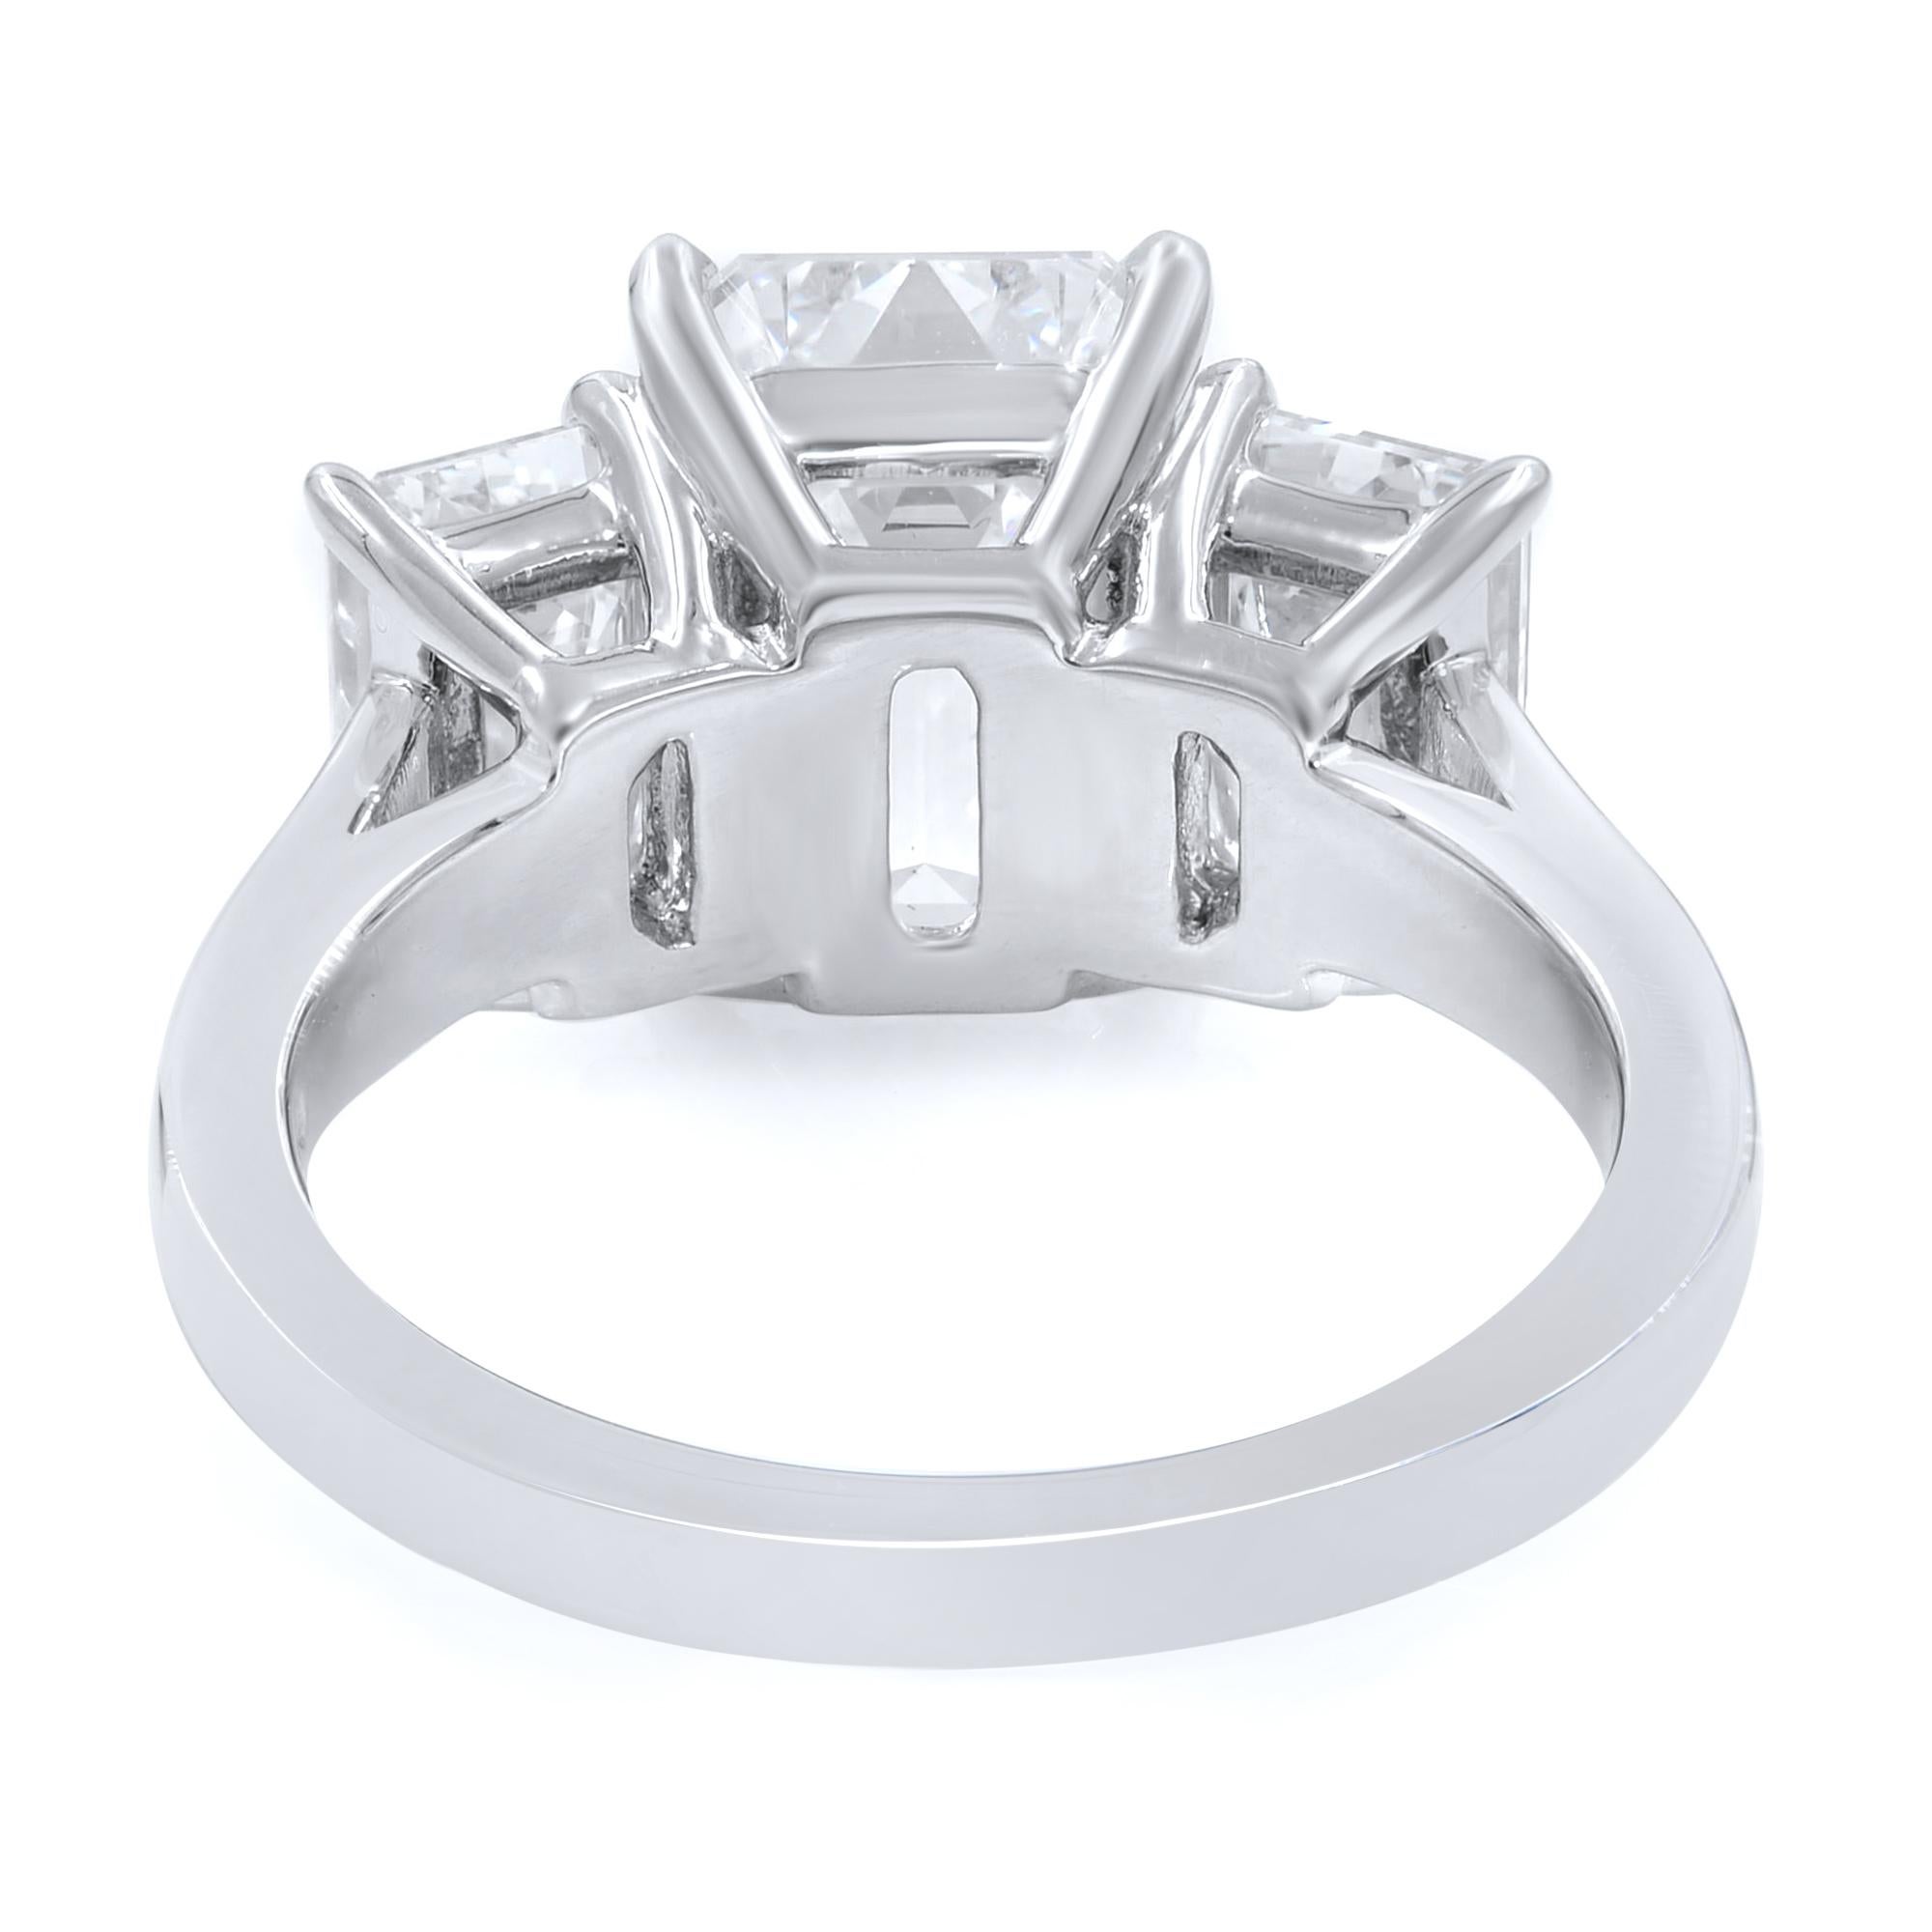 6.15 carats diamond ring